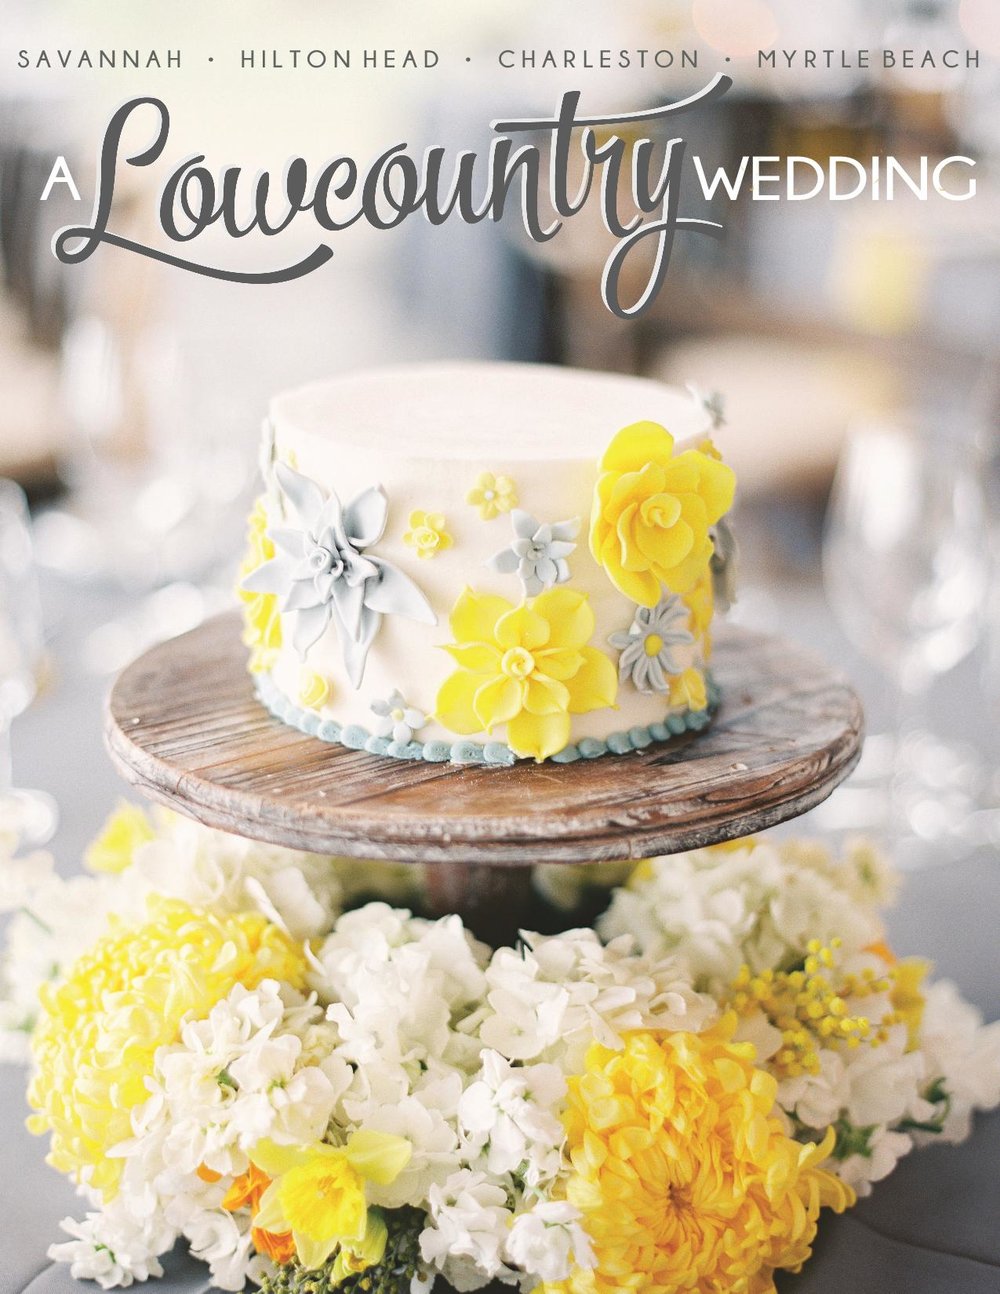 Buy The Issue A Lowcountry Wedding Blog Magazine Charleston